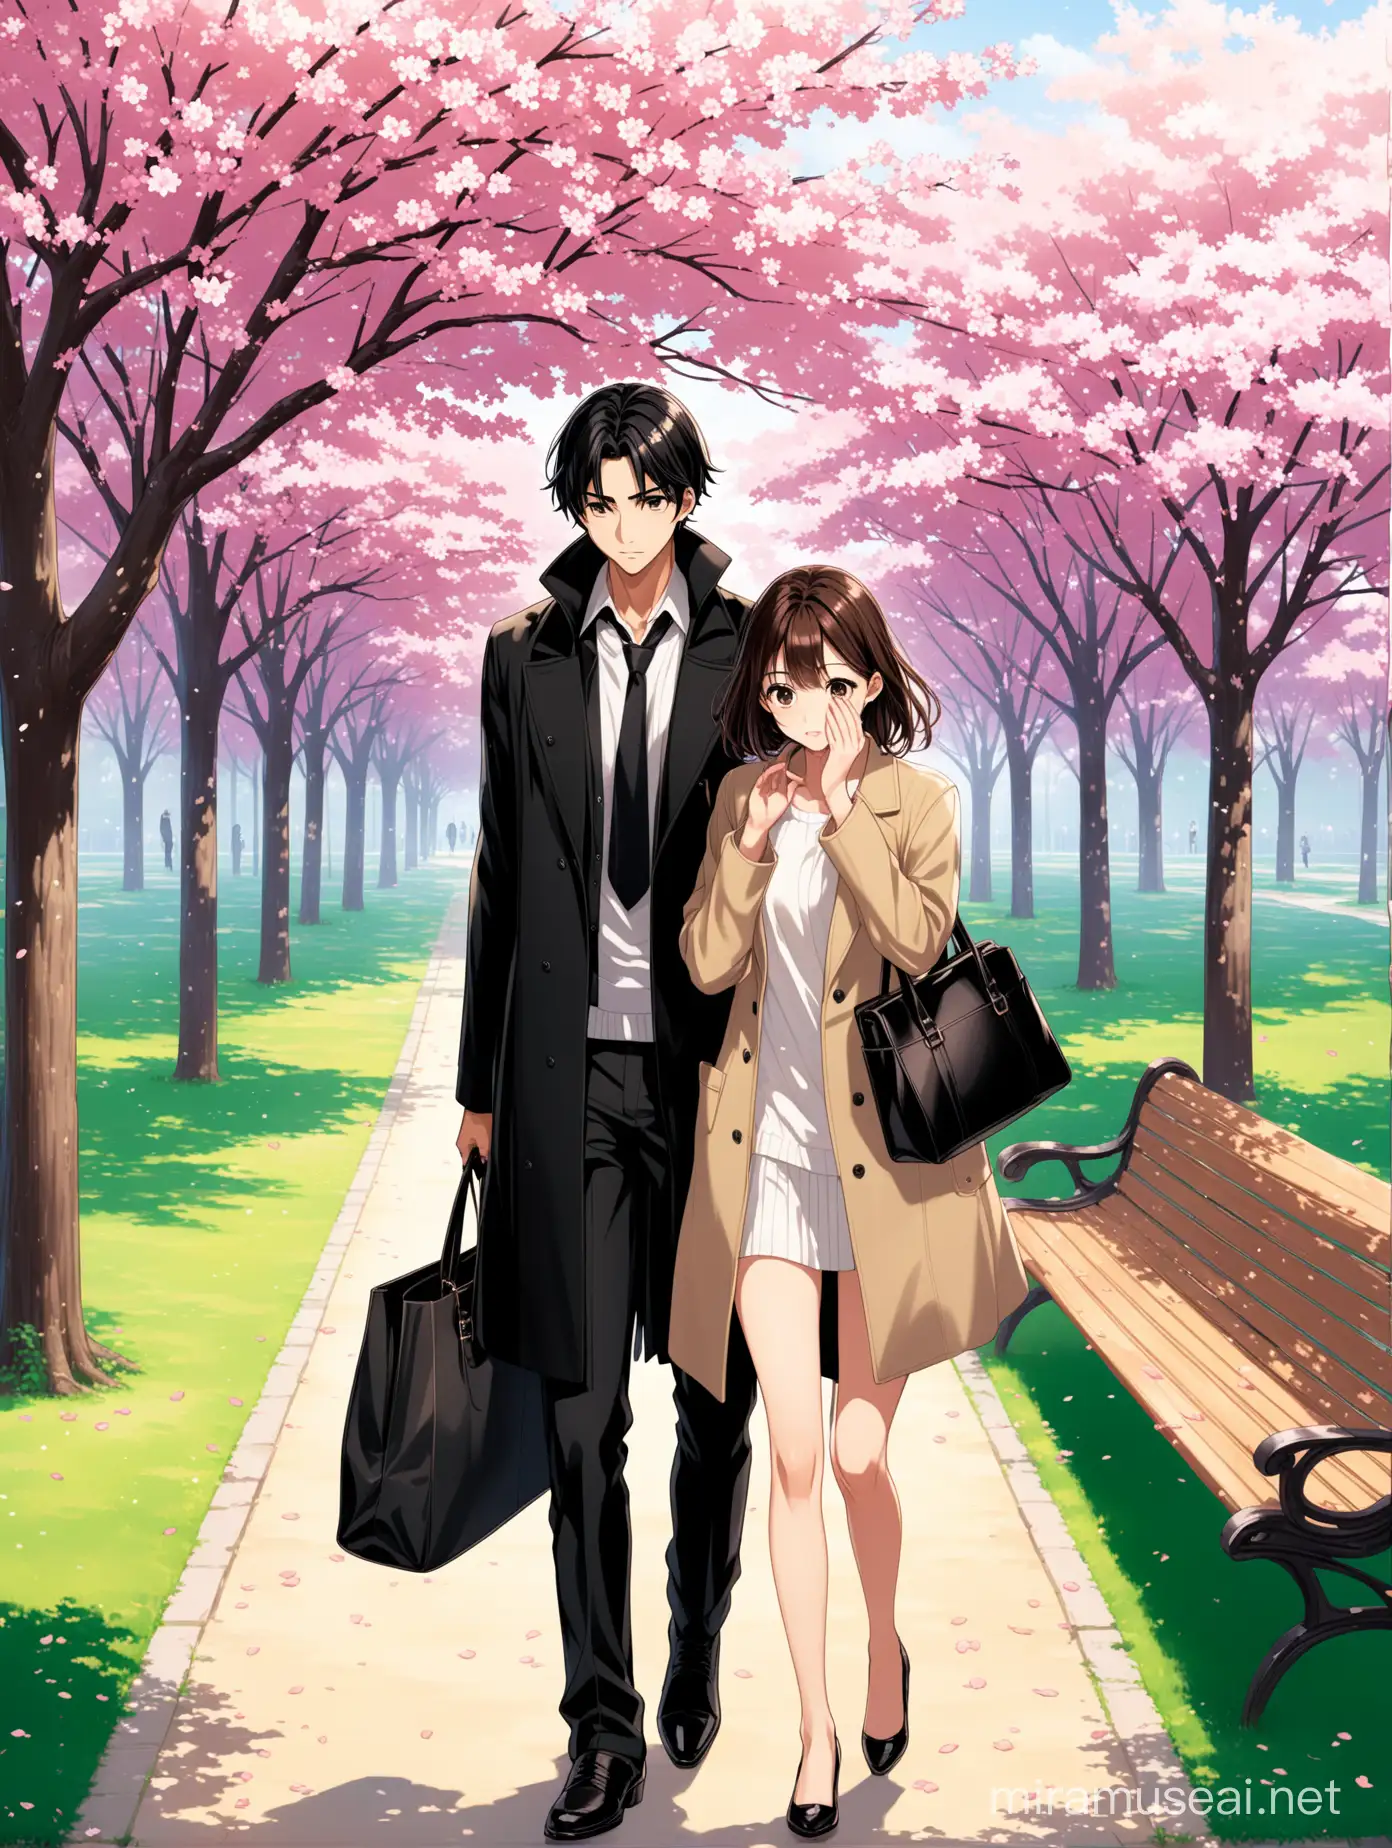 Heartbreak in Tokyo Park Young Couple Separating Amid Falling Sakura Petals